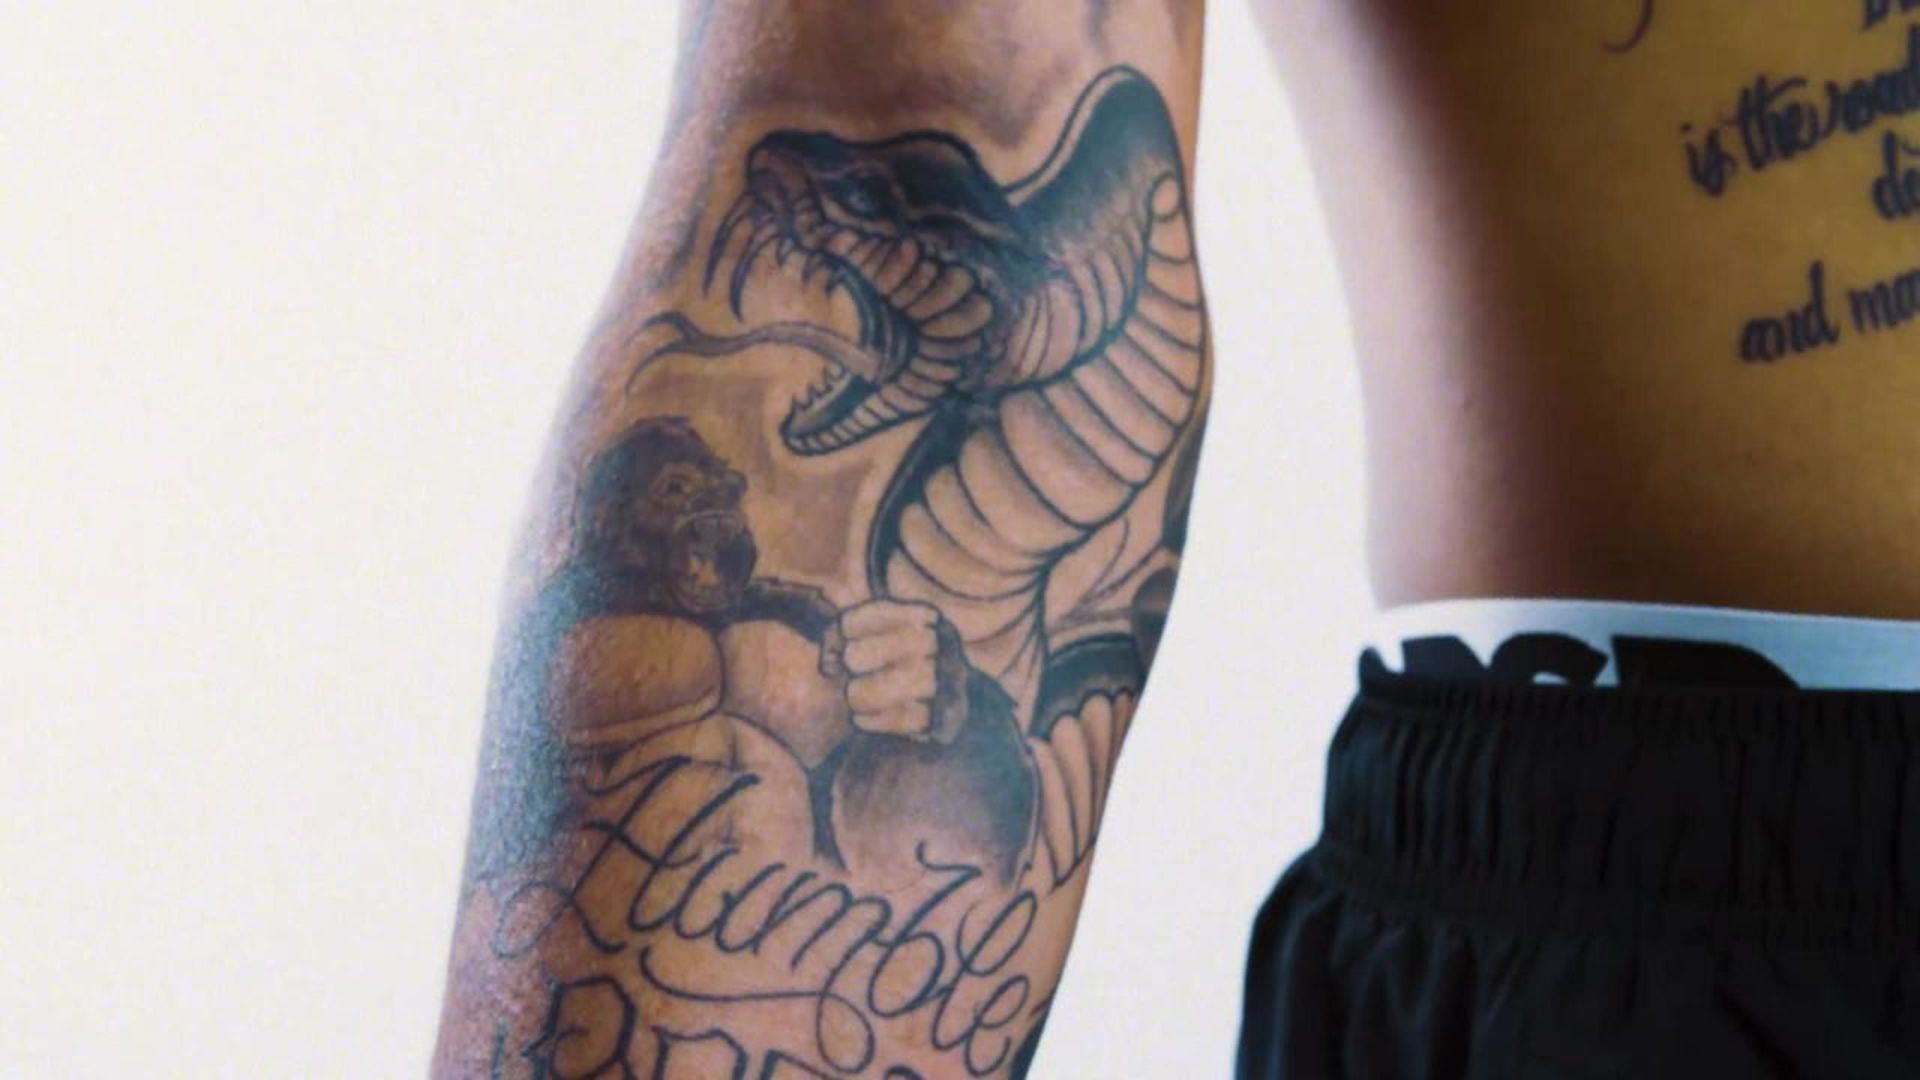 Santa Fe Klan nos explica el significado de sus tatuajes | Tattoo Tour | GQ  México y Latinoamérica - YouTube